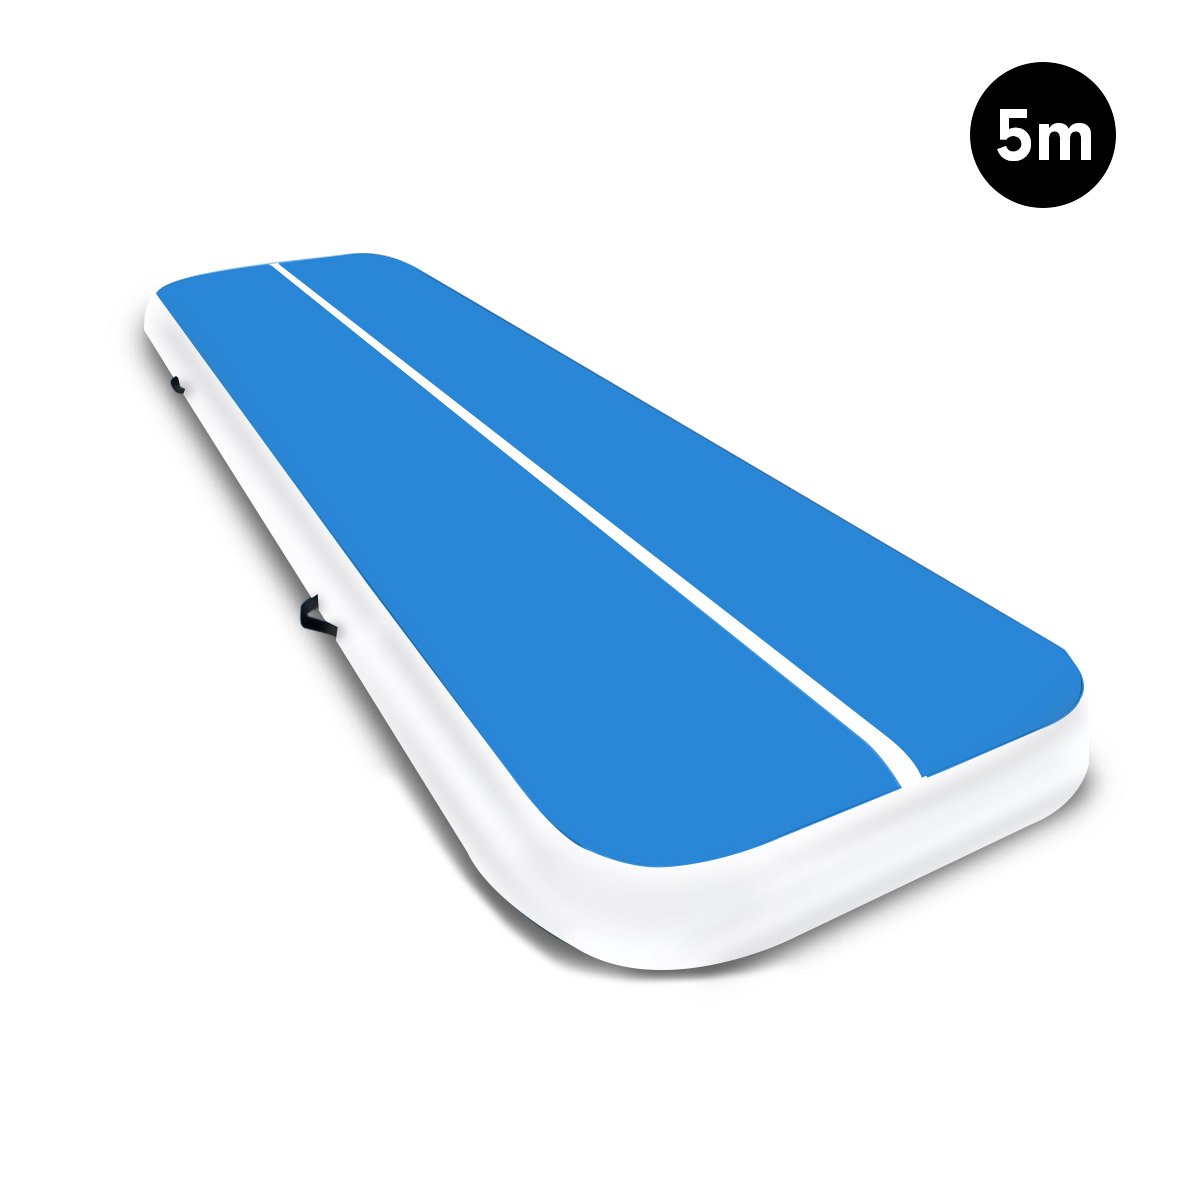 5m x 1m Air Track Inflatable Tumbling Gymnastics Mat - Blue White 2